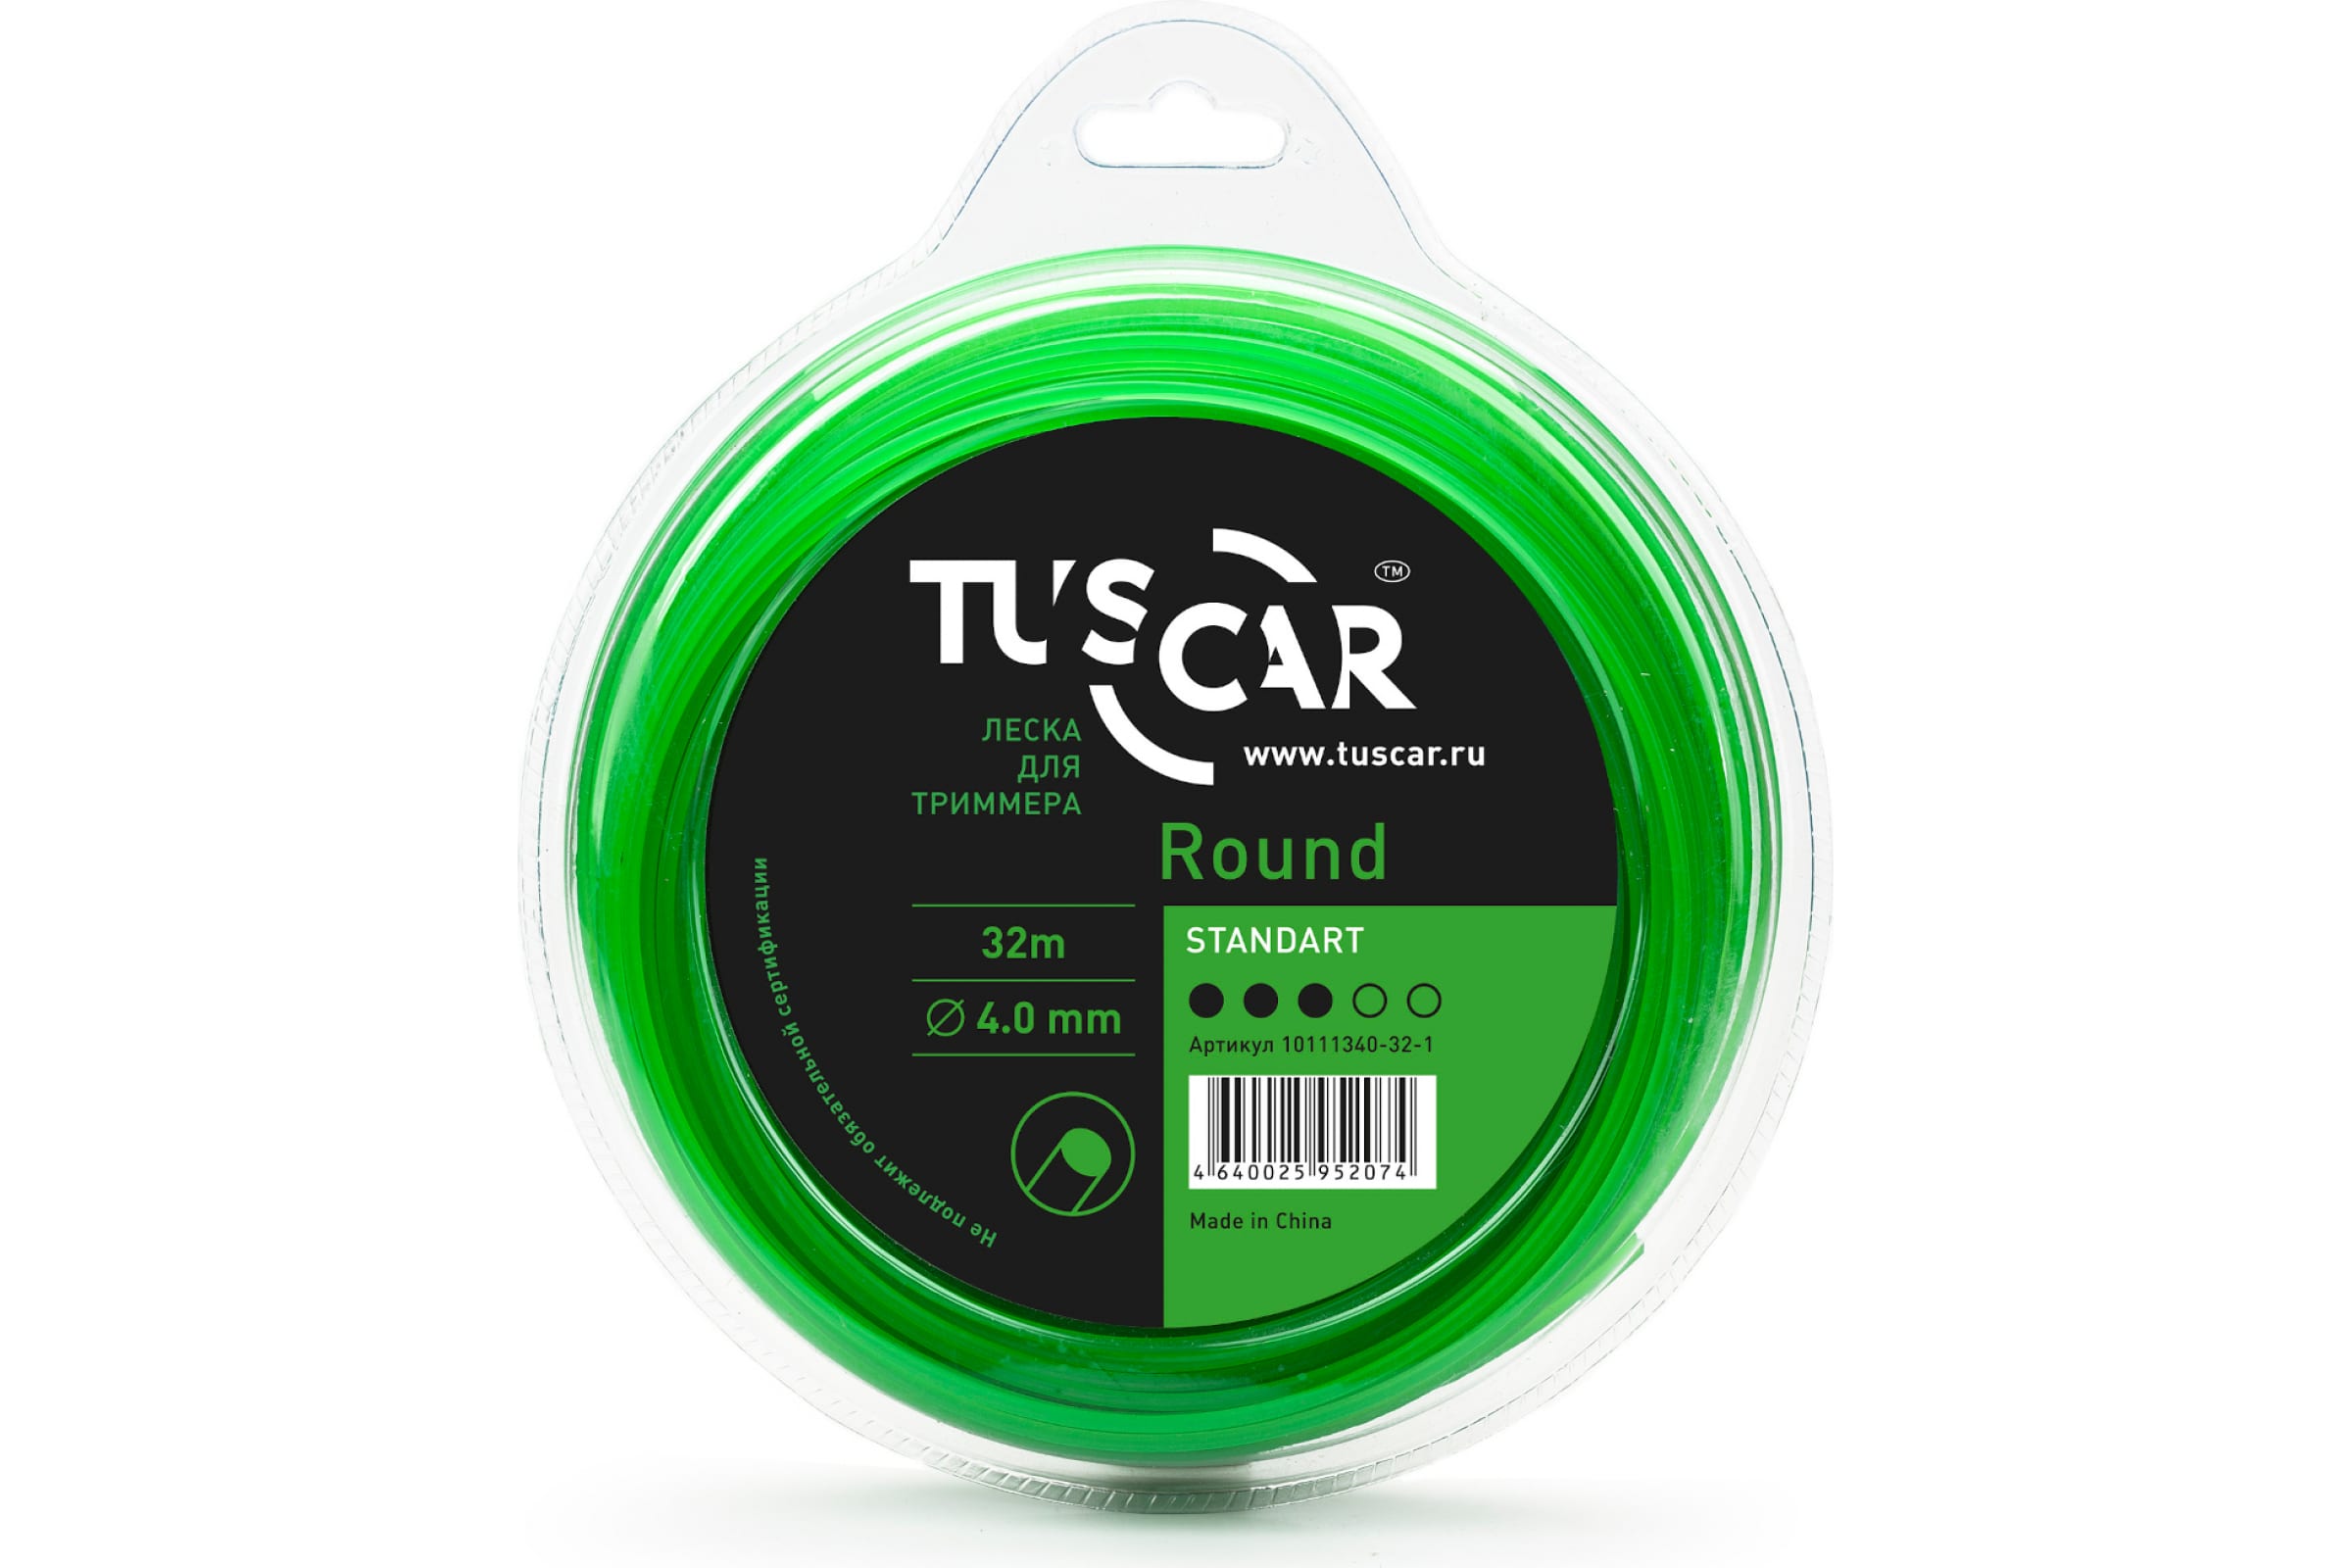 фото Tuscar леска для триммера round, standart, 4.0mmx32m 10111340-32-1